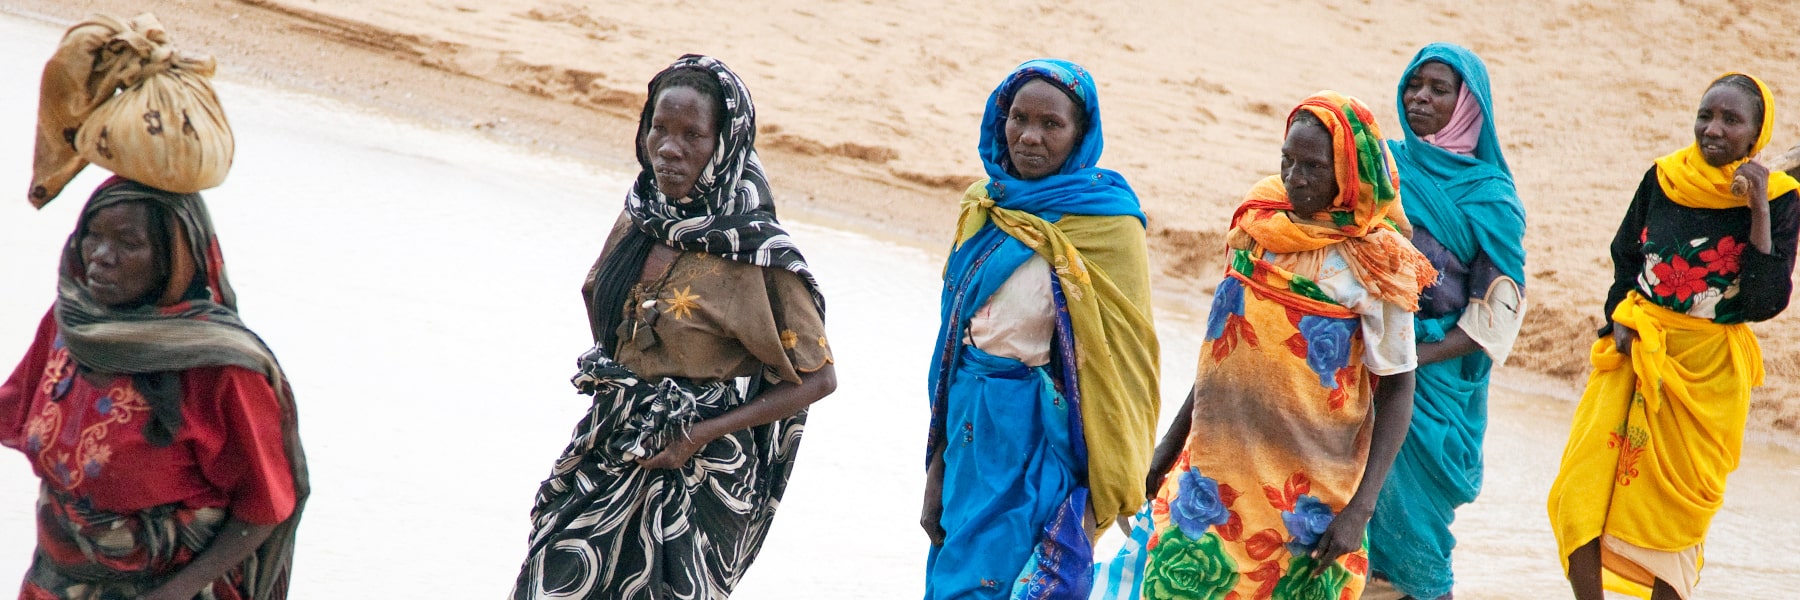 African women walking along desert like background carrying goods on their head